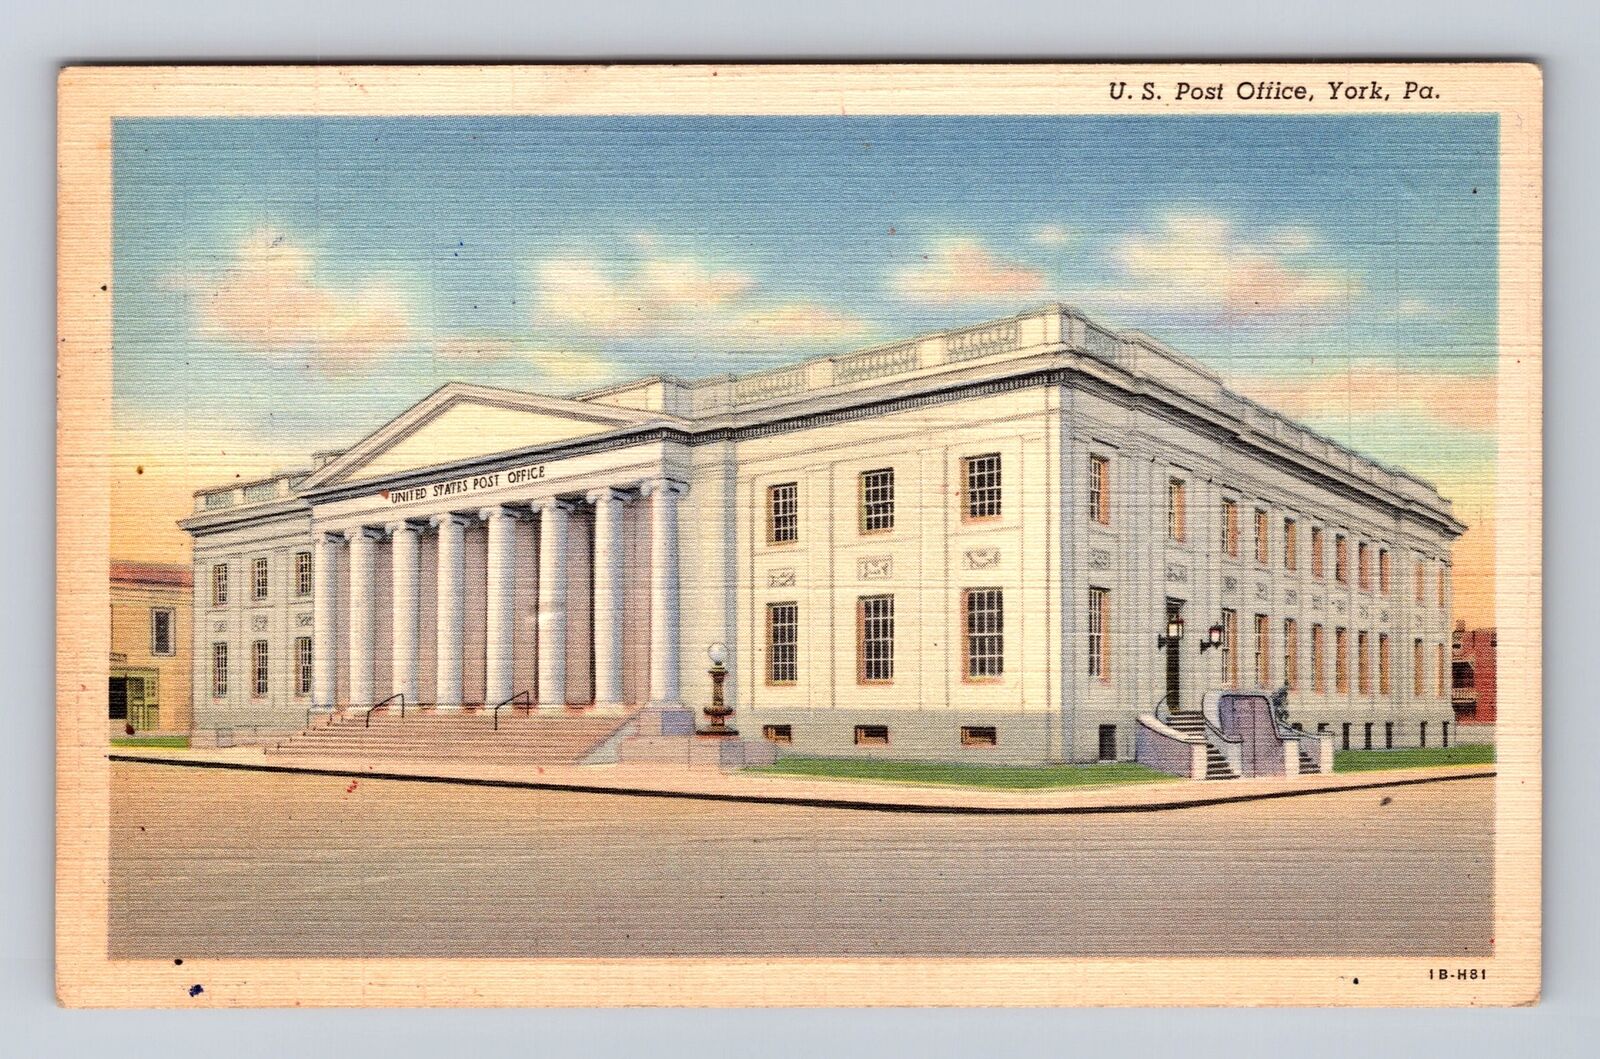 York PA-Pennsylvania, U.S Post Office, Antique Vintage Souvenir Postcard